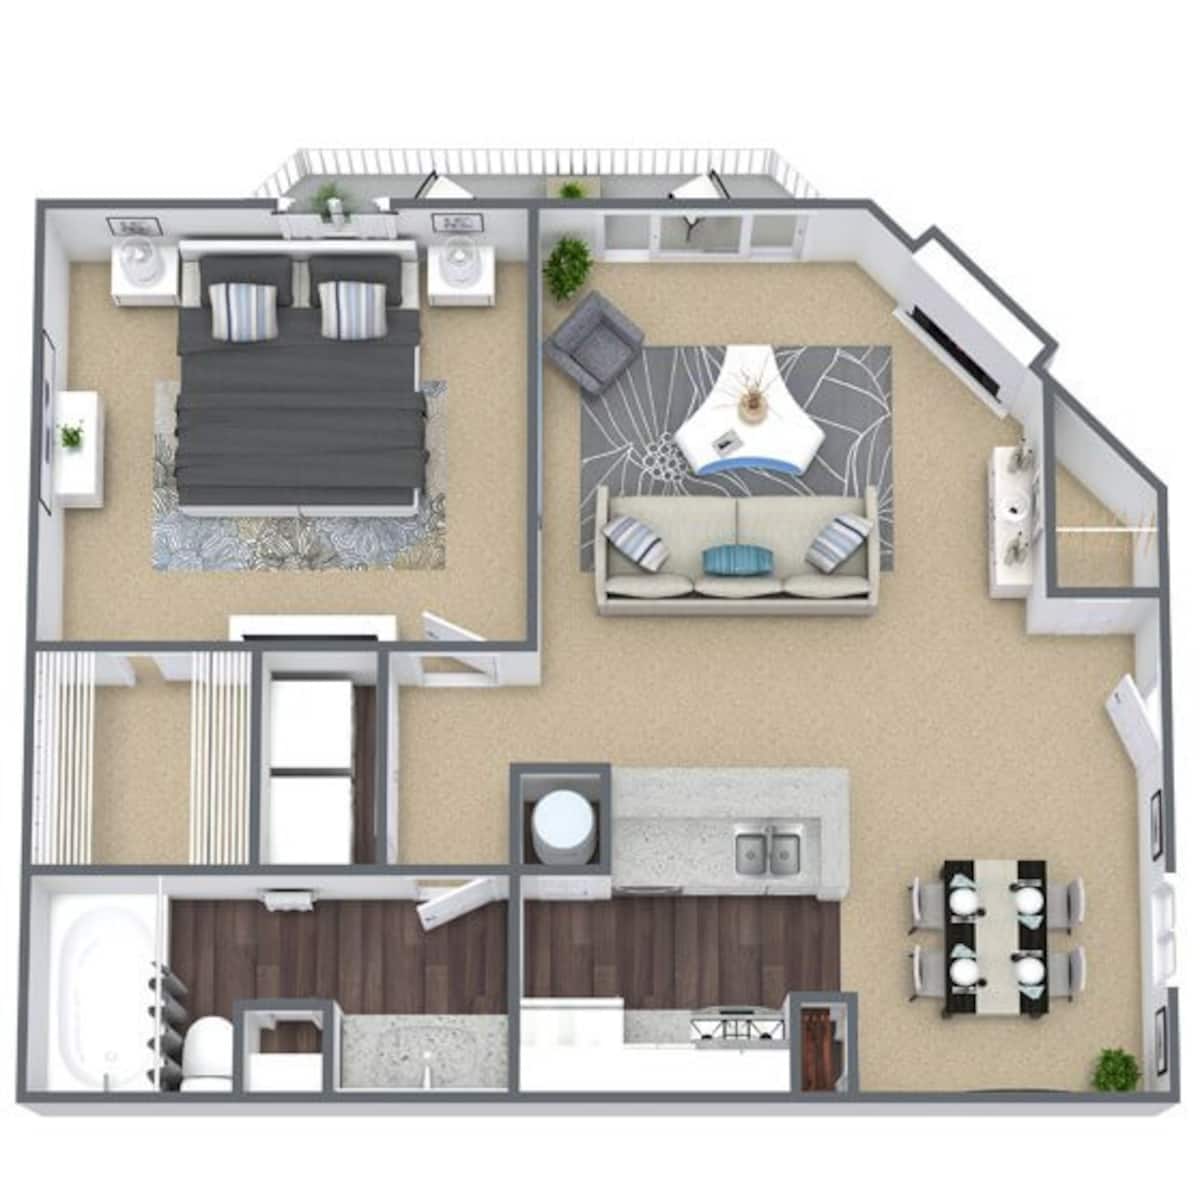 Floorplan diagram for Ash, showing 1 bedroom